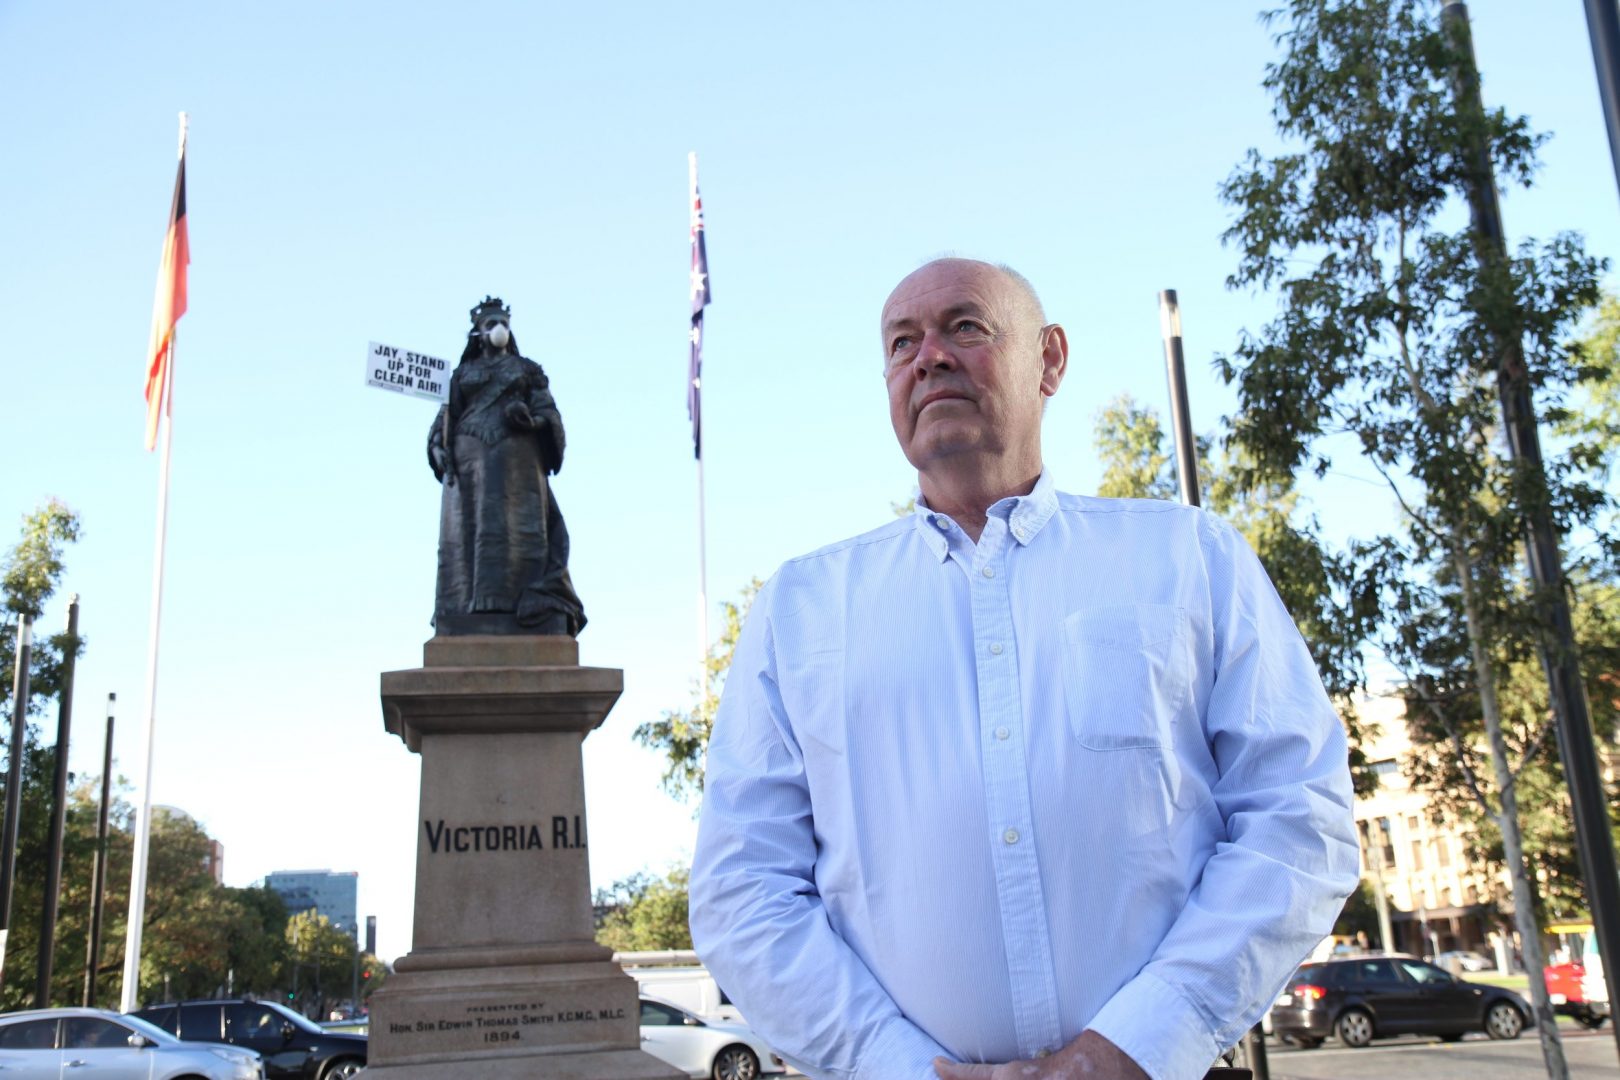 Port Augusta Resident Alan McMahon Stands up for Clean Air|Explorer John McDouall Stuart Stands up for Clean Air in Port Augusta|20180314_0904260-1-min|GP0STRNBU-2-min